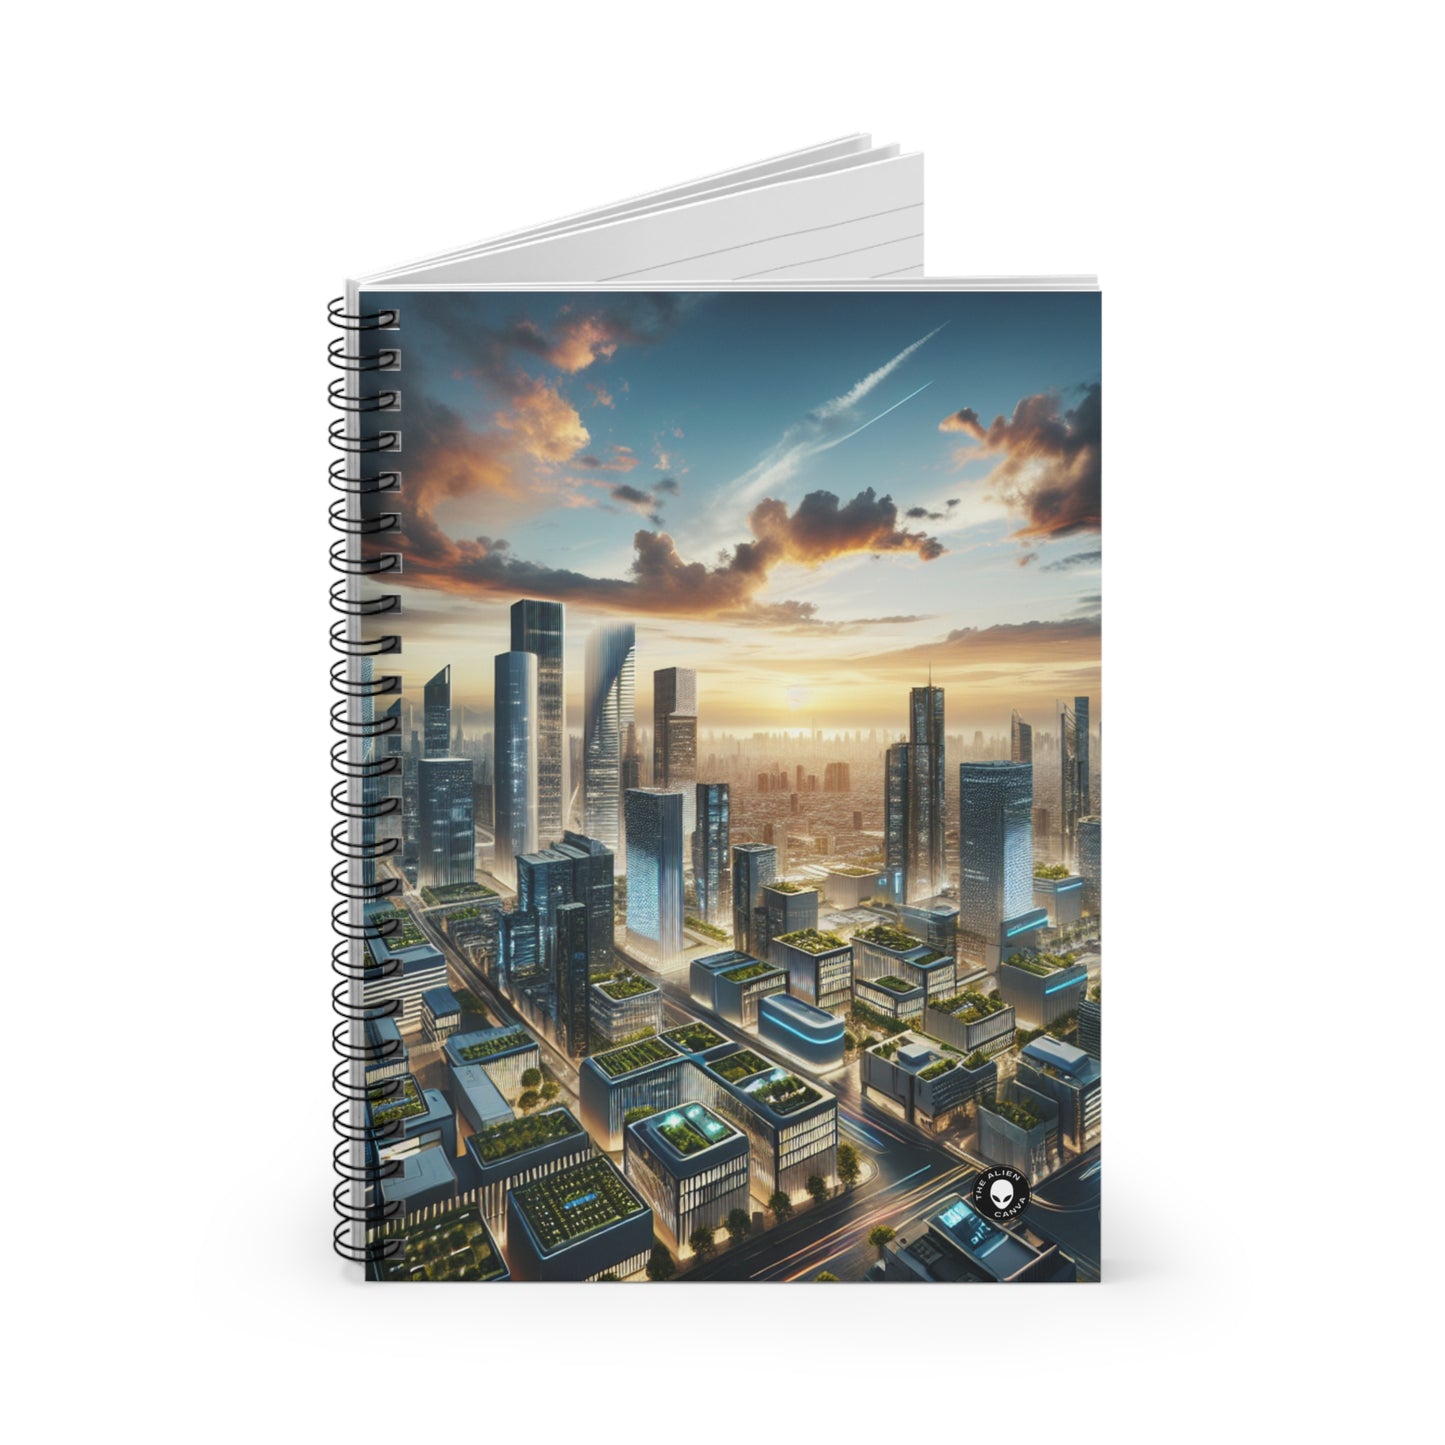 "Future Metropolis: A Neo-Futuristic Urban Utopia" - The Alien Spiral Notebook (Ruled Line) Neo-futurism